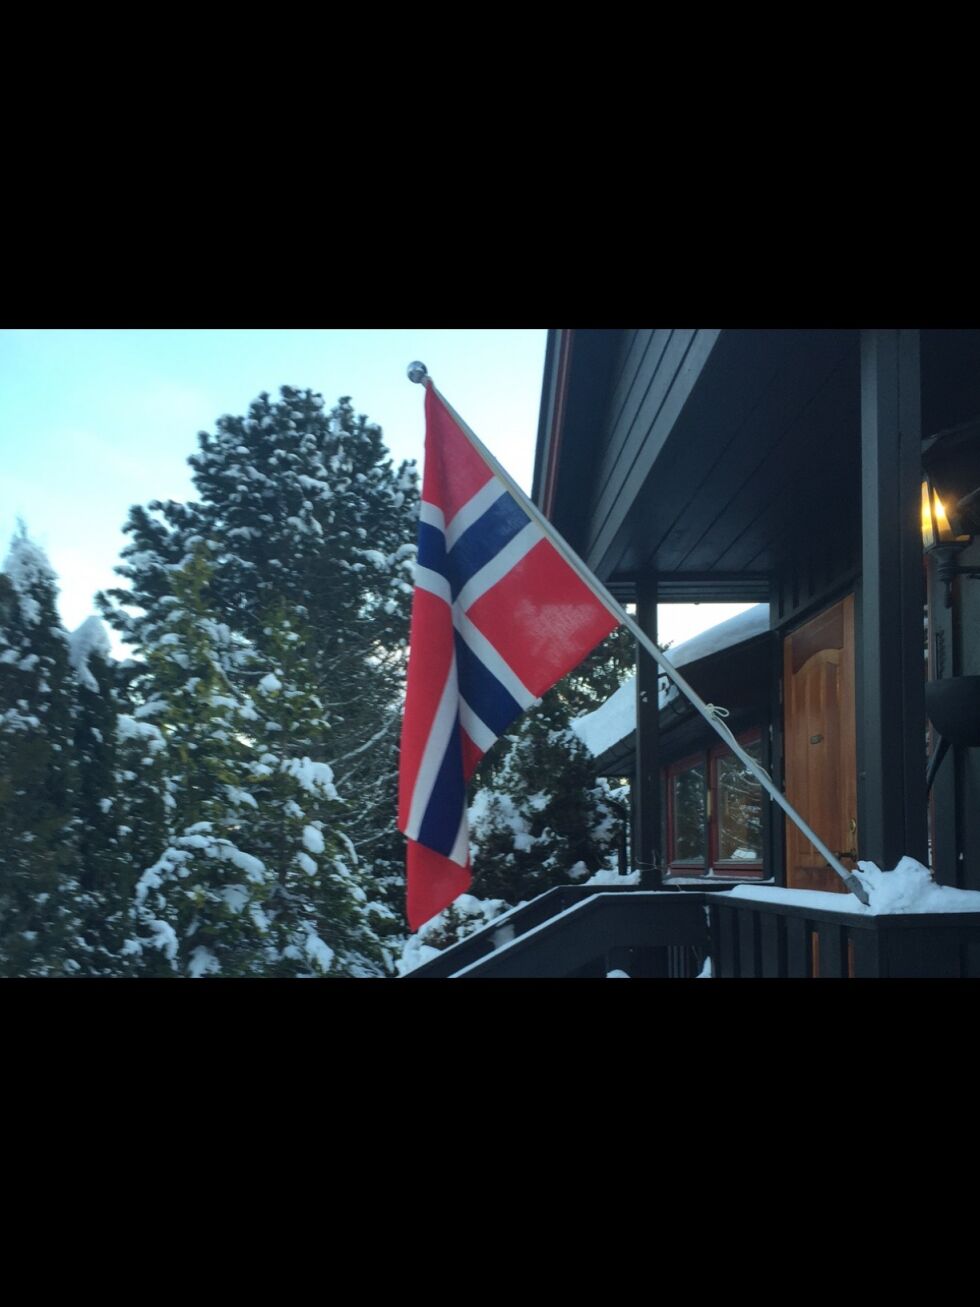 Ketil Hugaas flagget hjemme på Ski i Akershus.
 Foto: Ketil Hugaas